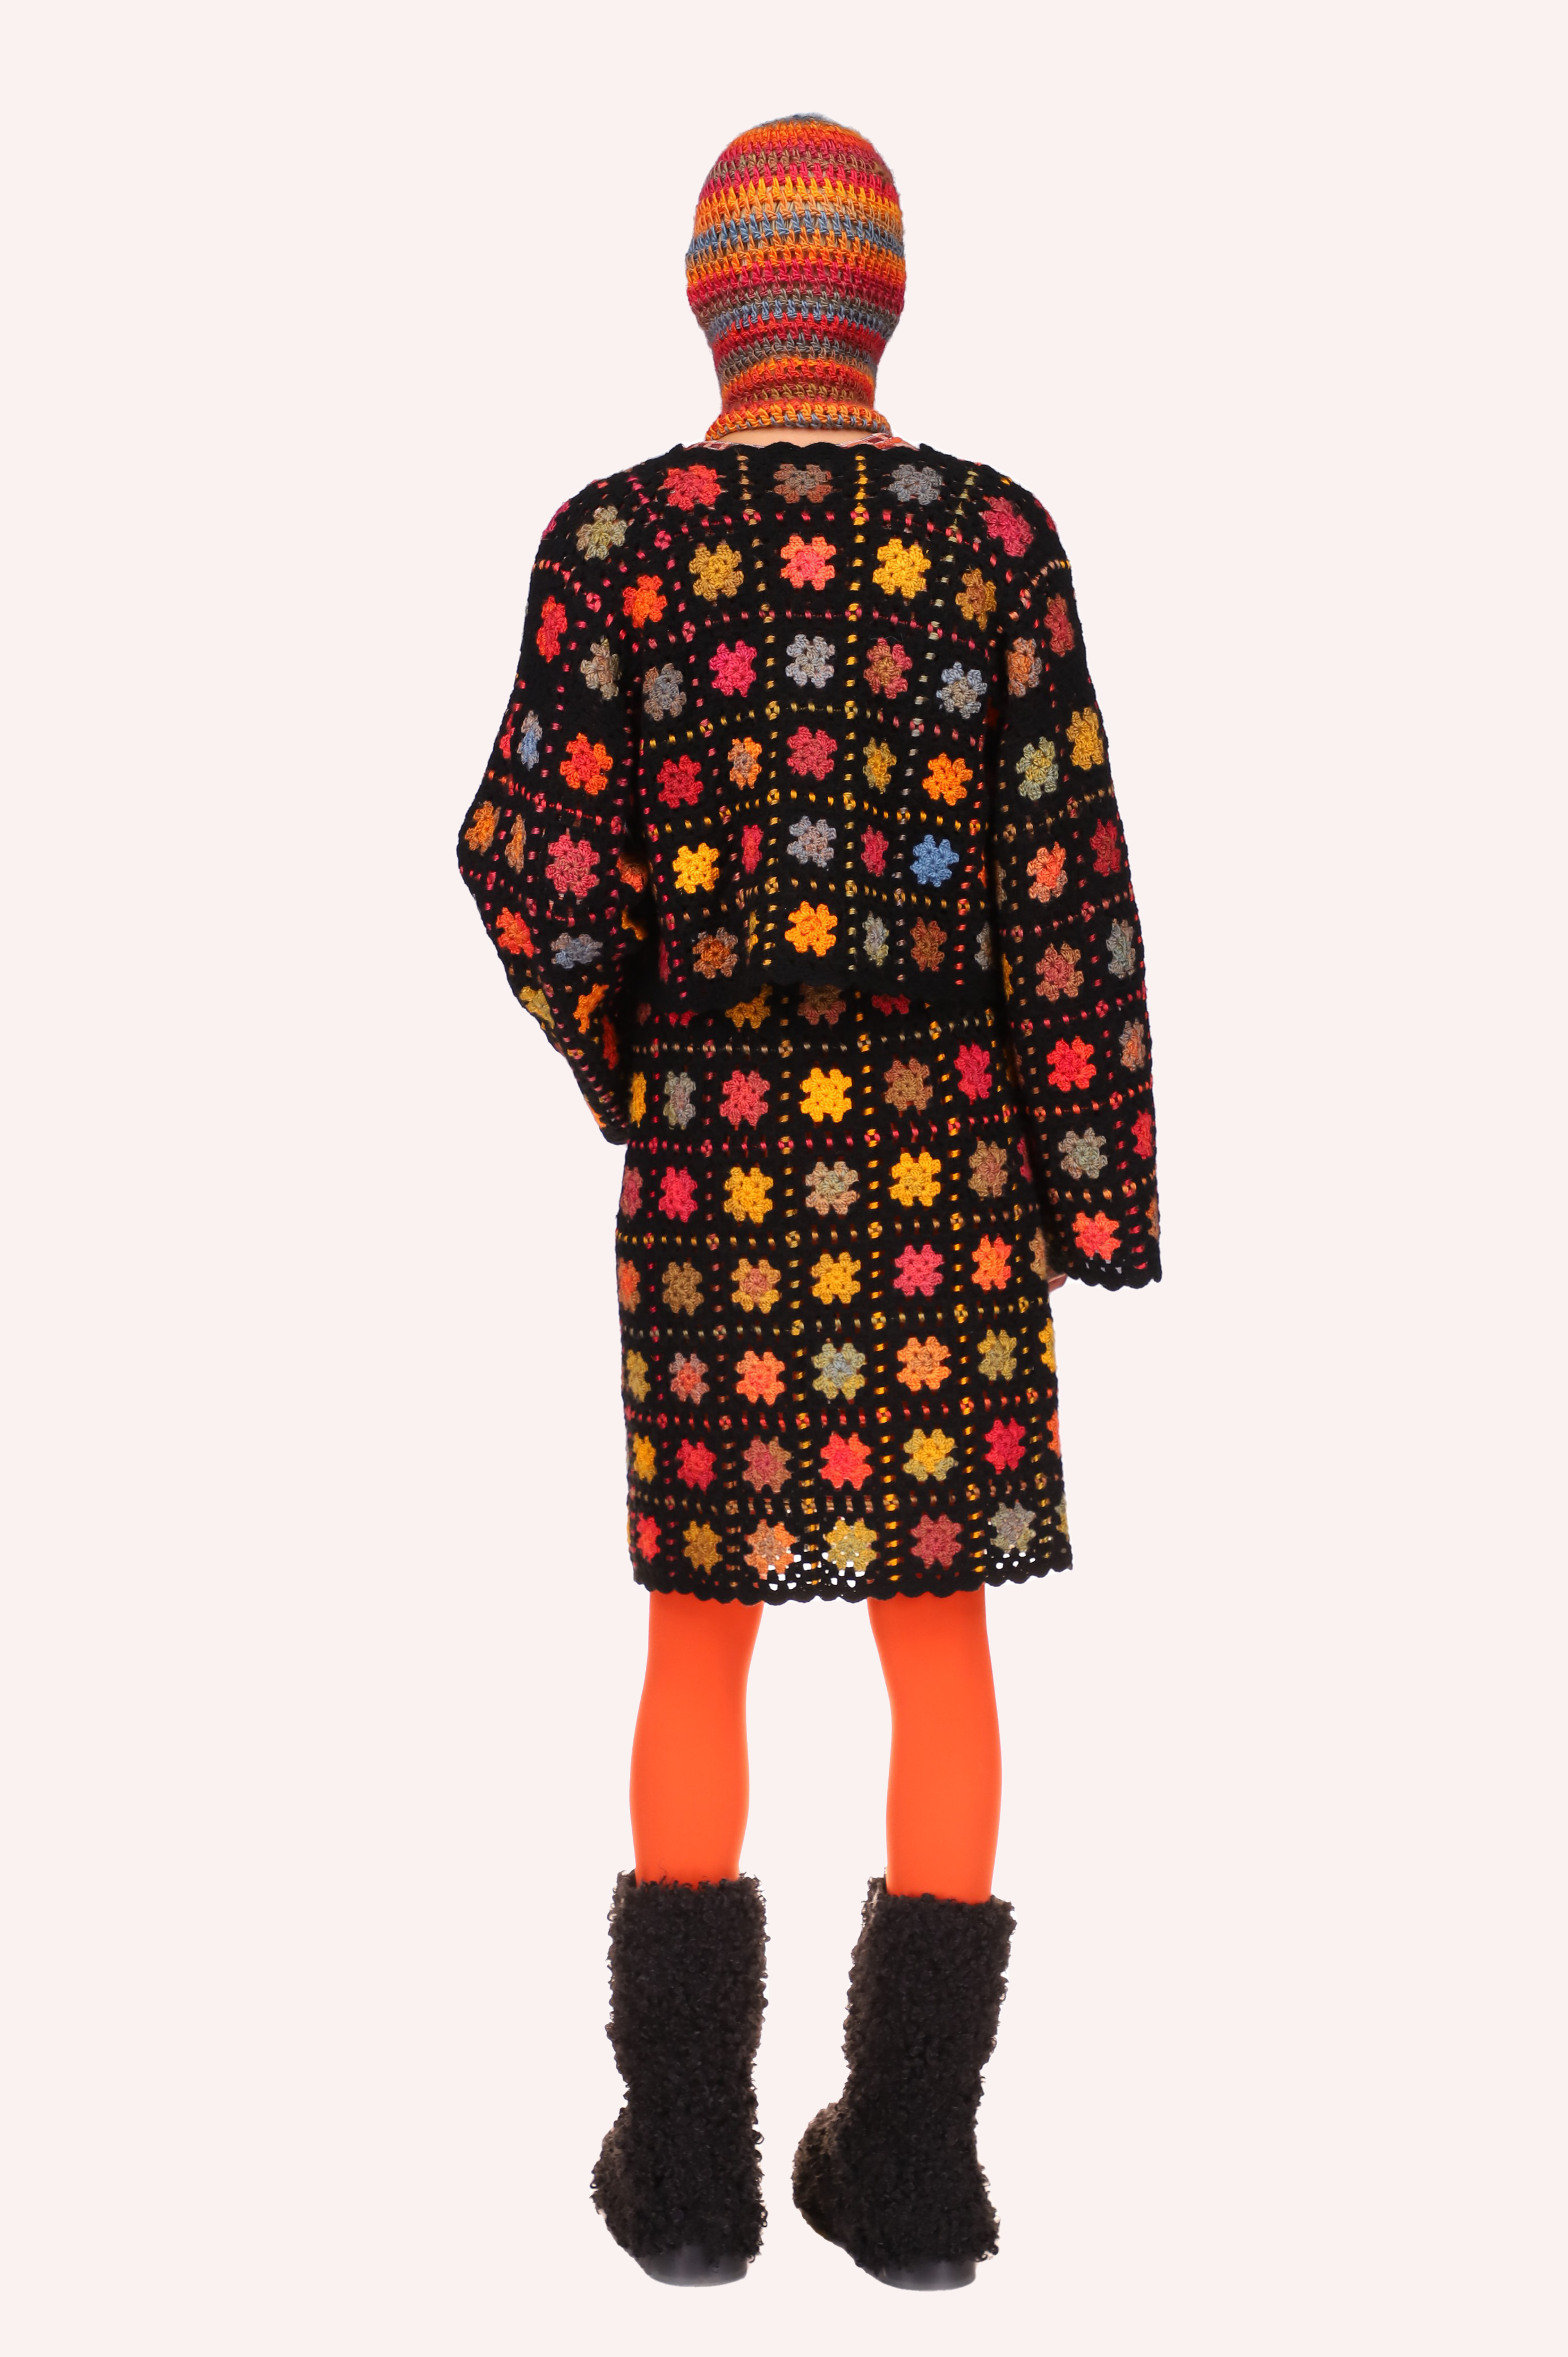 Stainglass Crochet Cardigan, design of squares of orange dots, stars like design in Orange, red, blue, greenish 